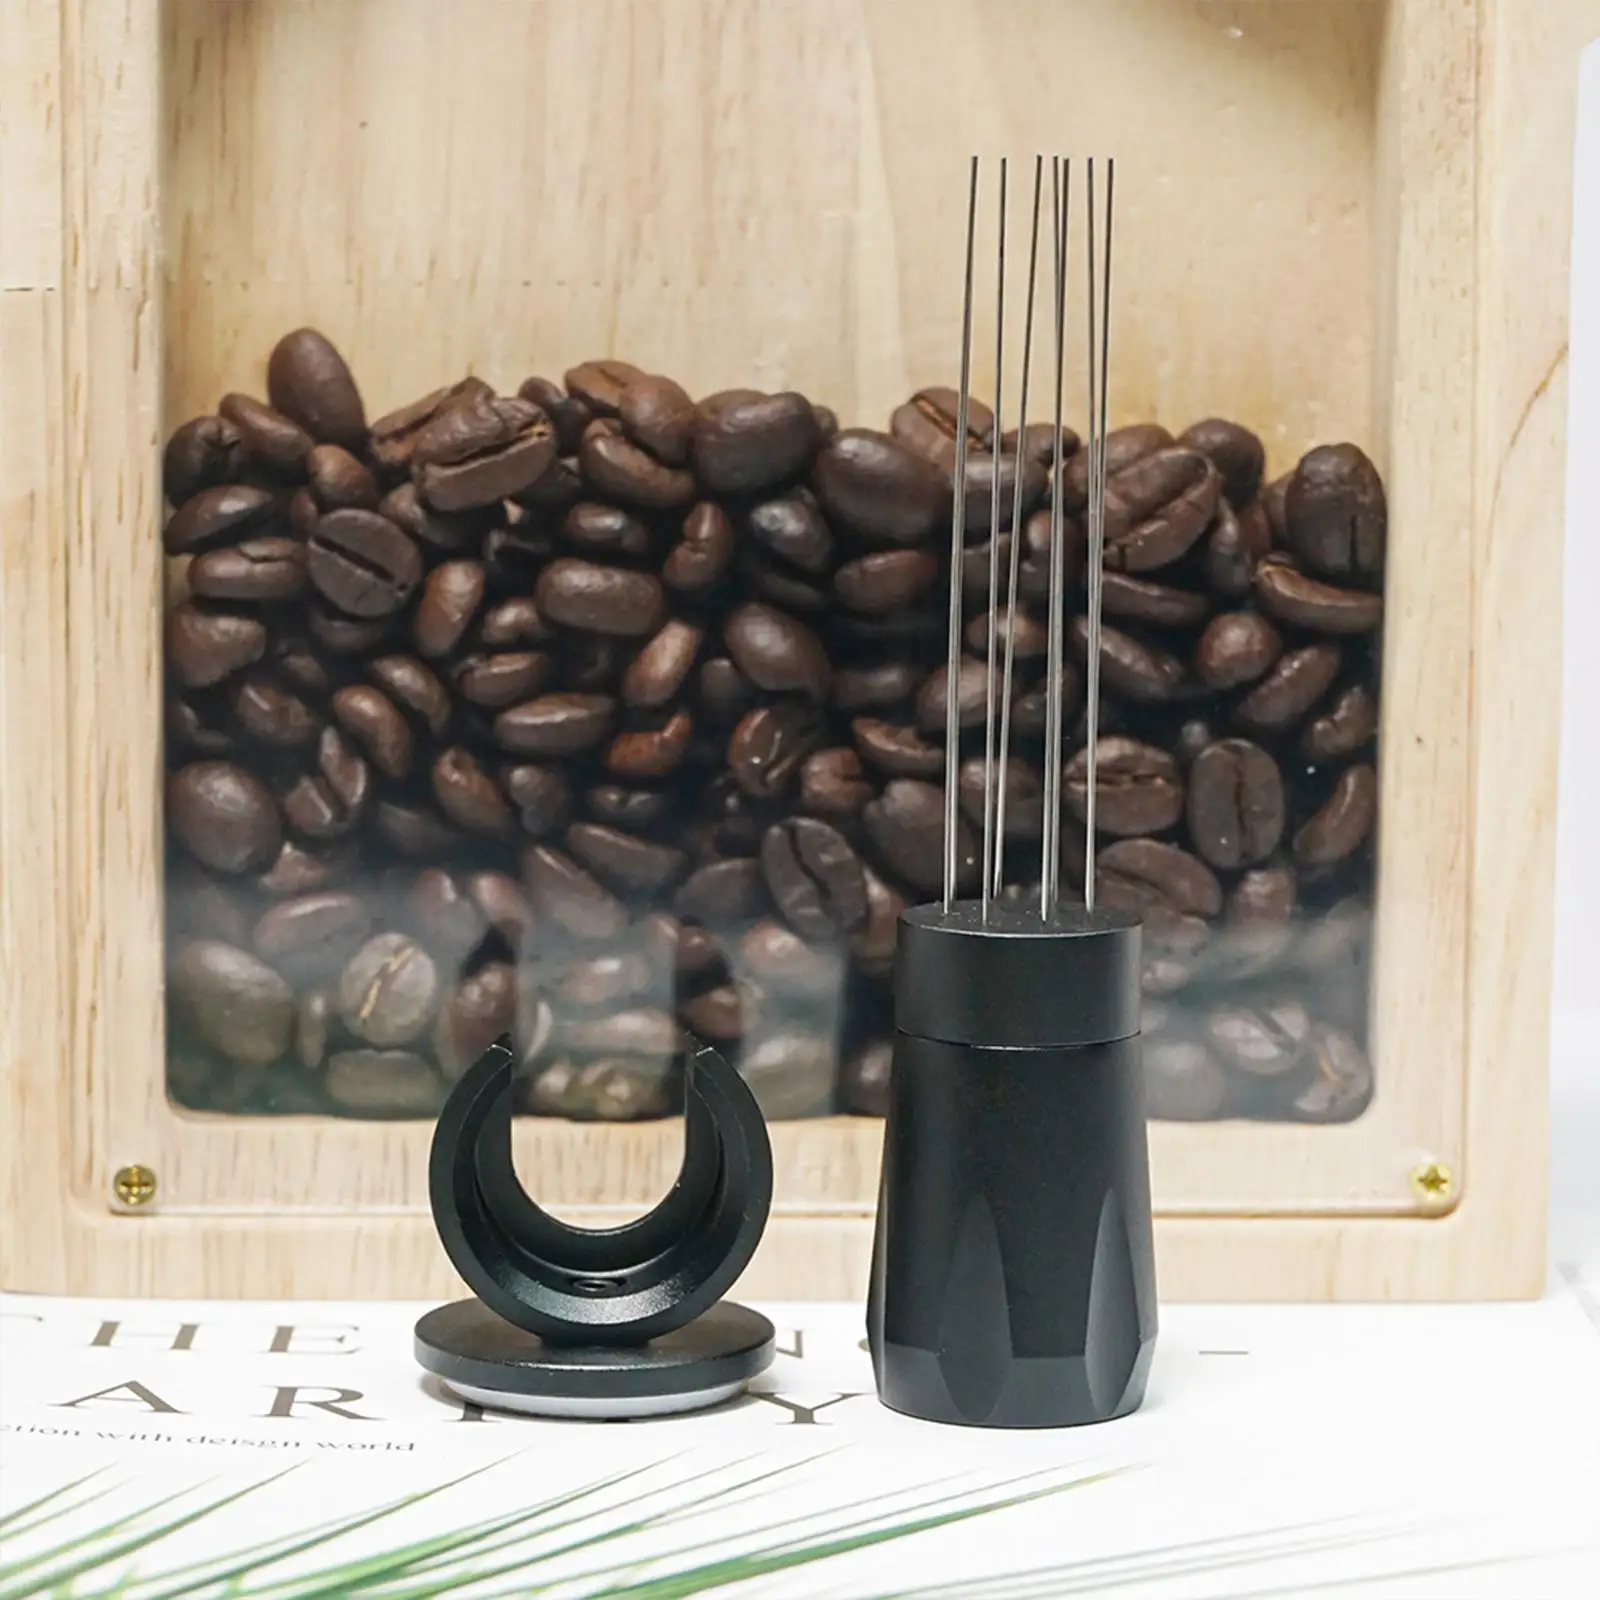 Coffee Tamper Distributor Coffee Stirrer Professional Leveler Tool Coffee Distributor for Office Coffee Shop Travel